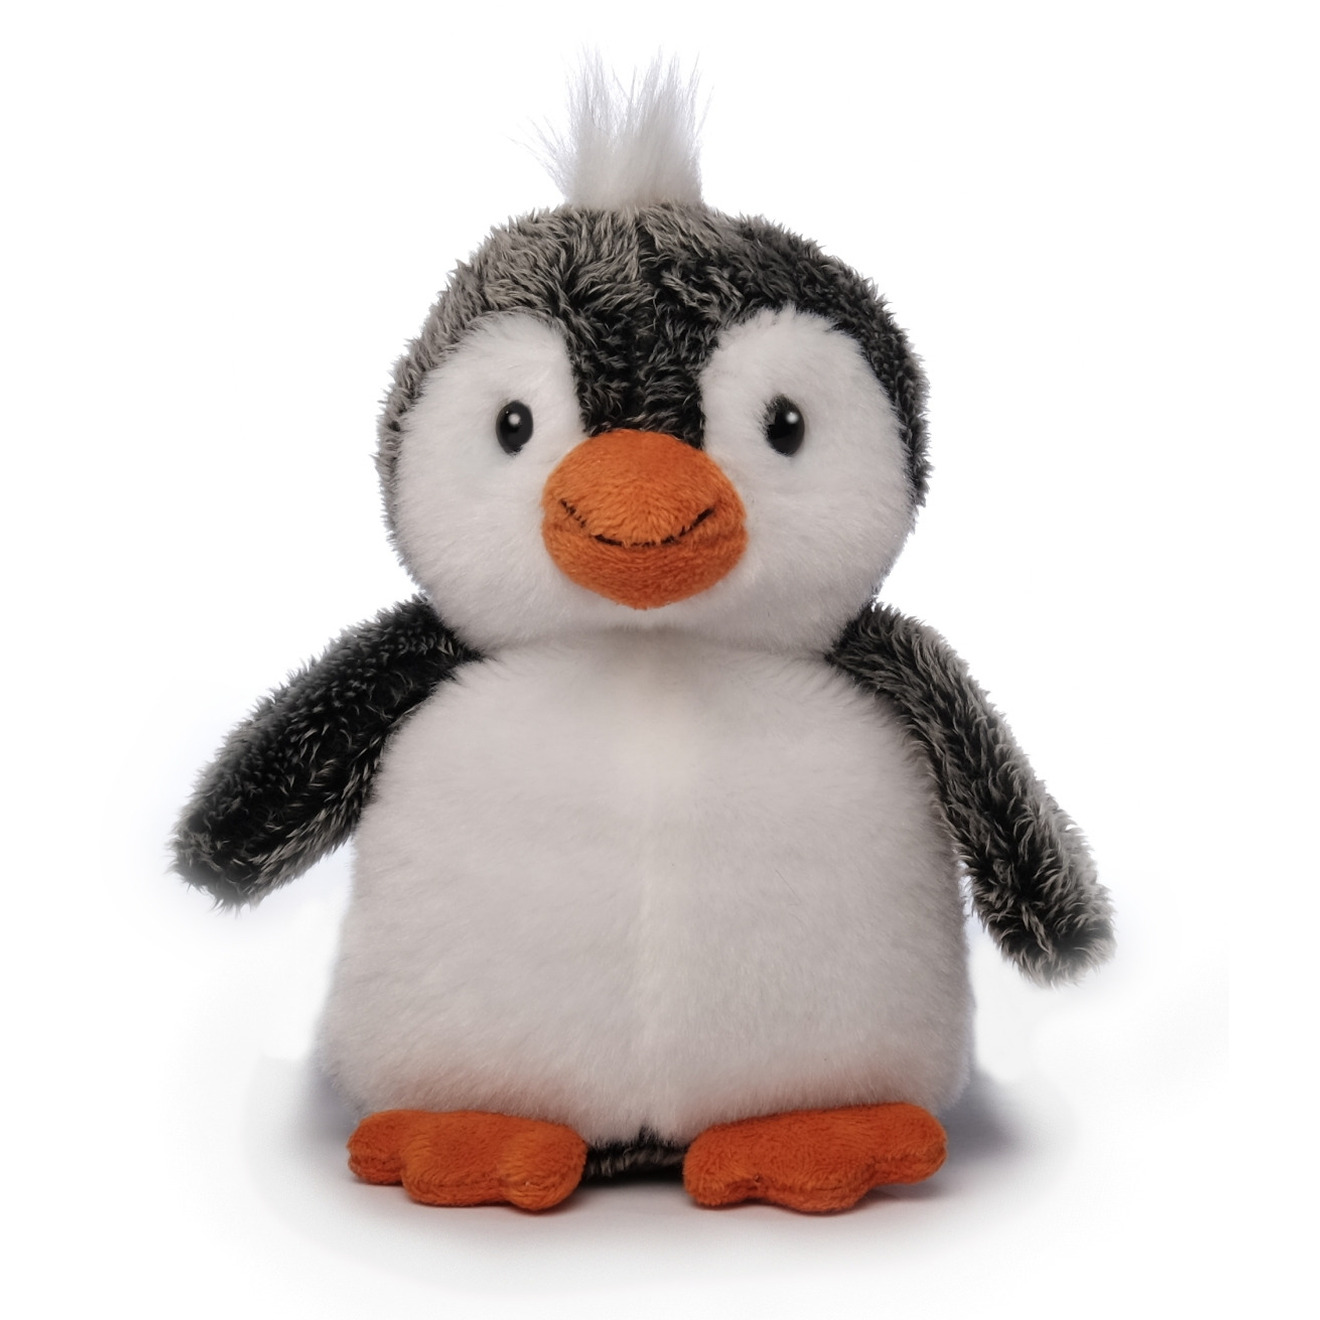 Inware pluche pinguin knuffeldier - grijs/wit - staand - 16 cm -